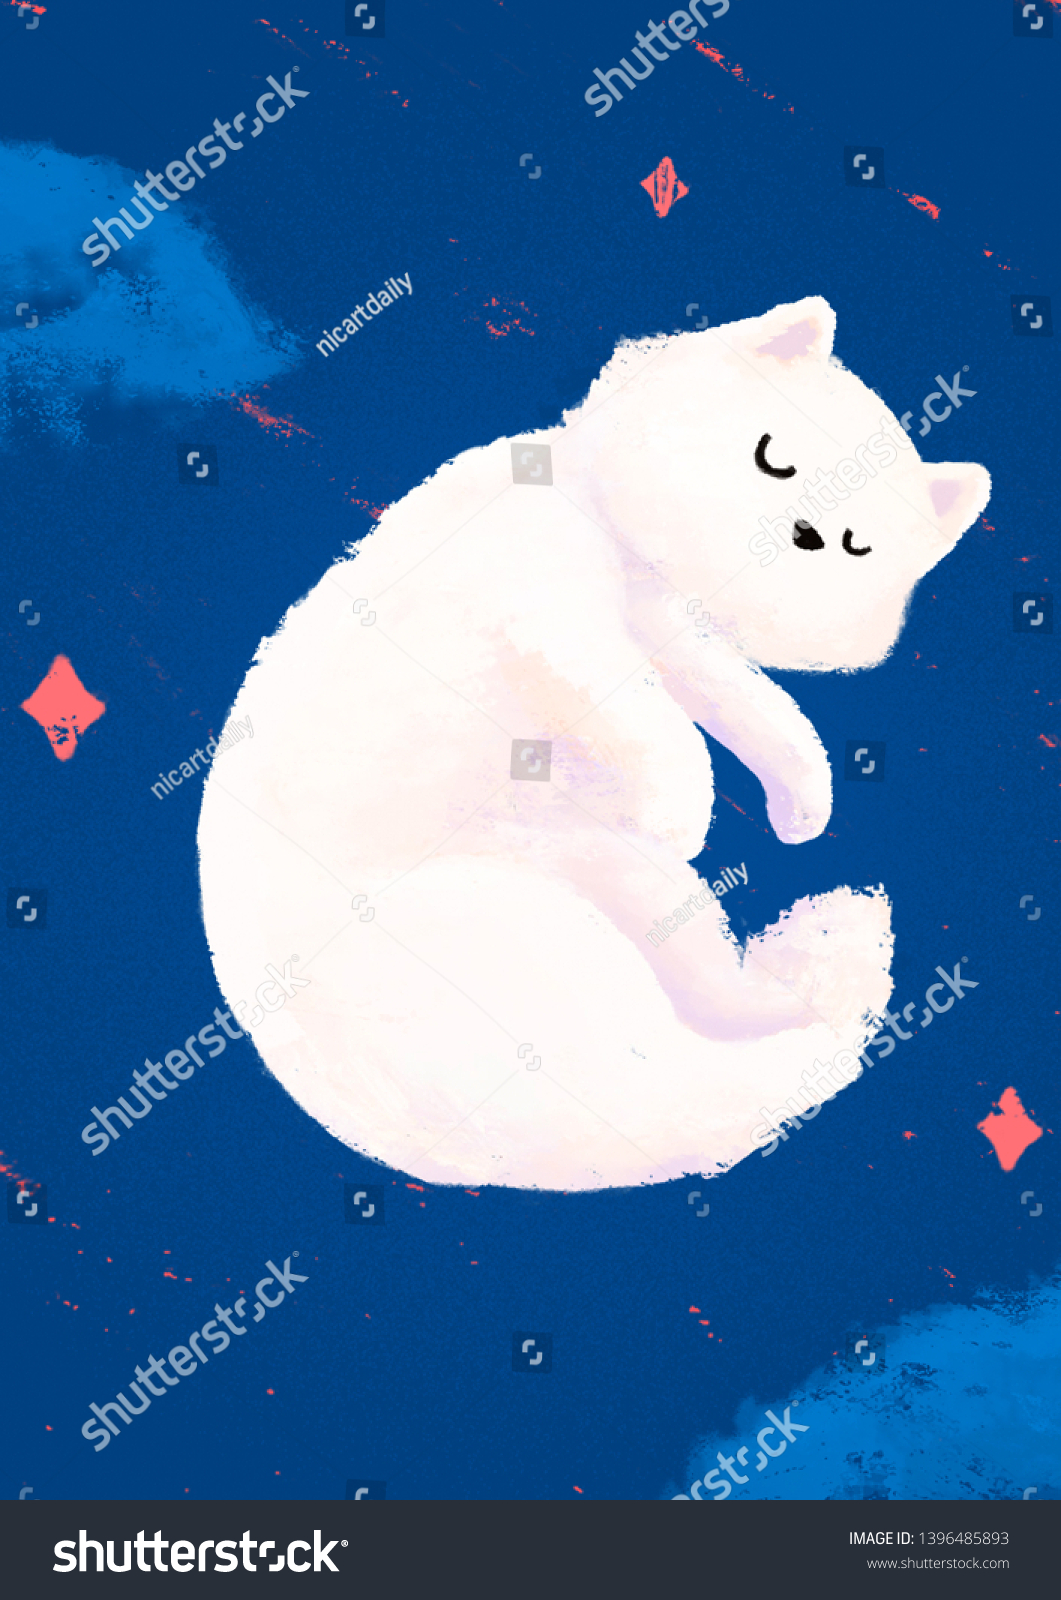 Cute Sleeping White Cat Illustration Against Stock Illustration ...